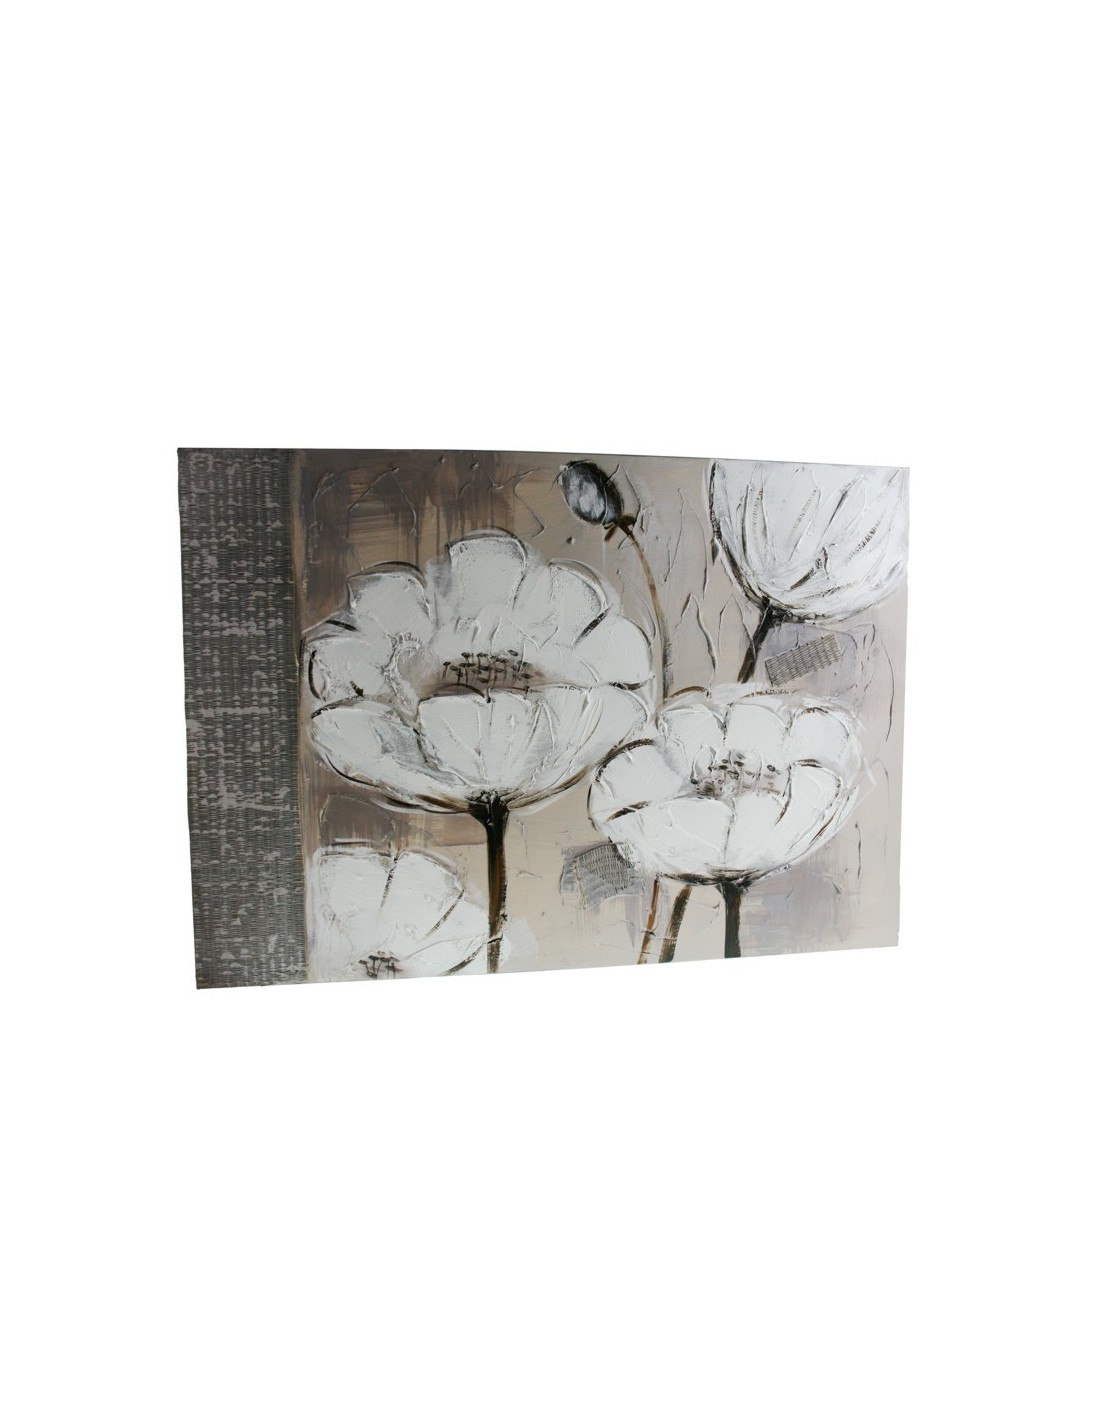 Cuadro con flores pintado en tela al óleo en tonalidades grises